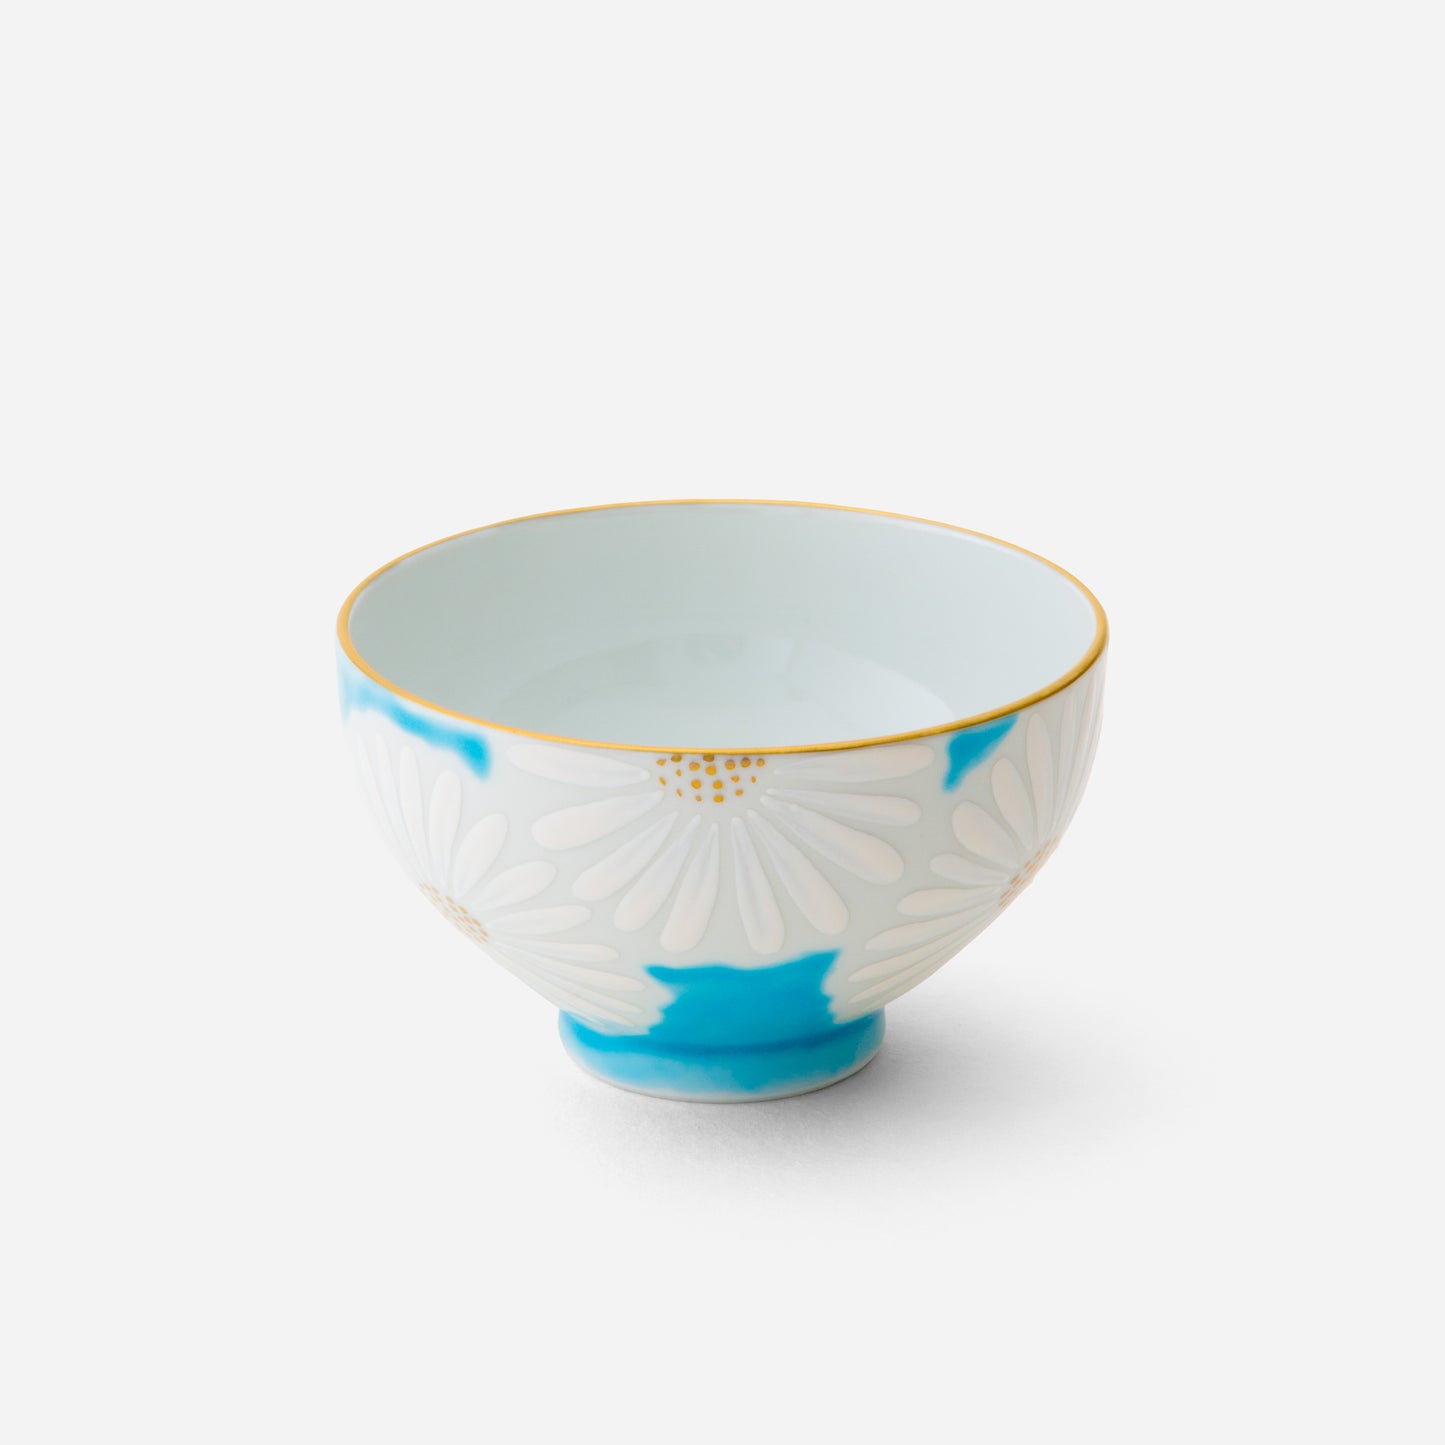 Kumidashi bowl, white chrysanthemum blue ground